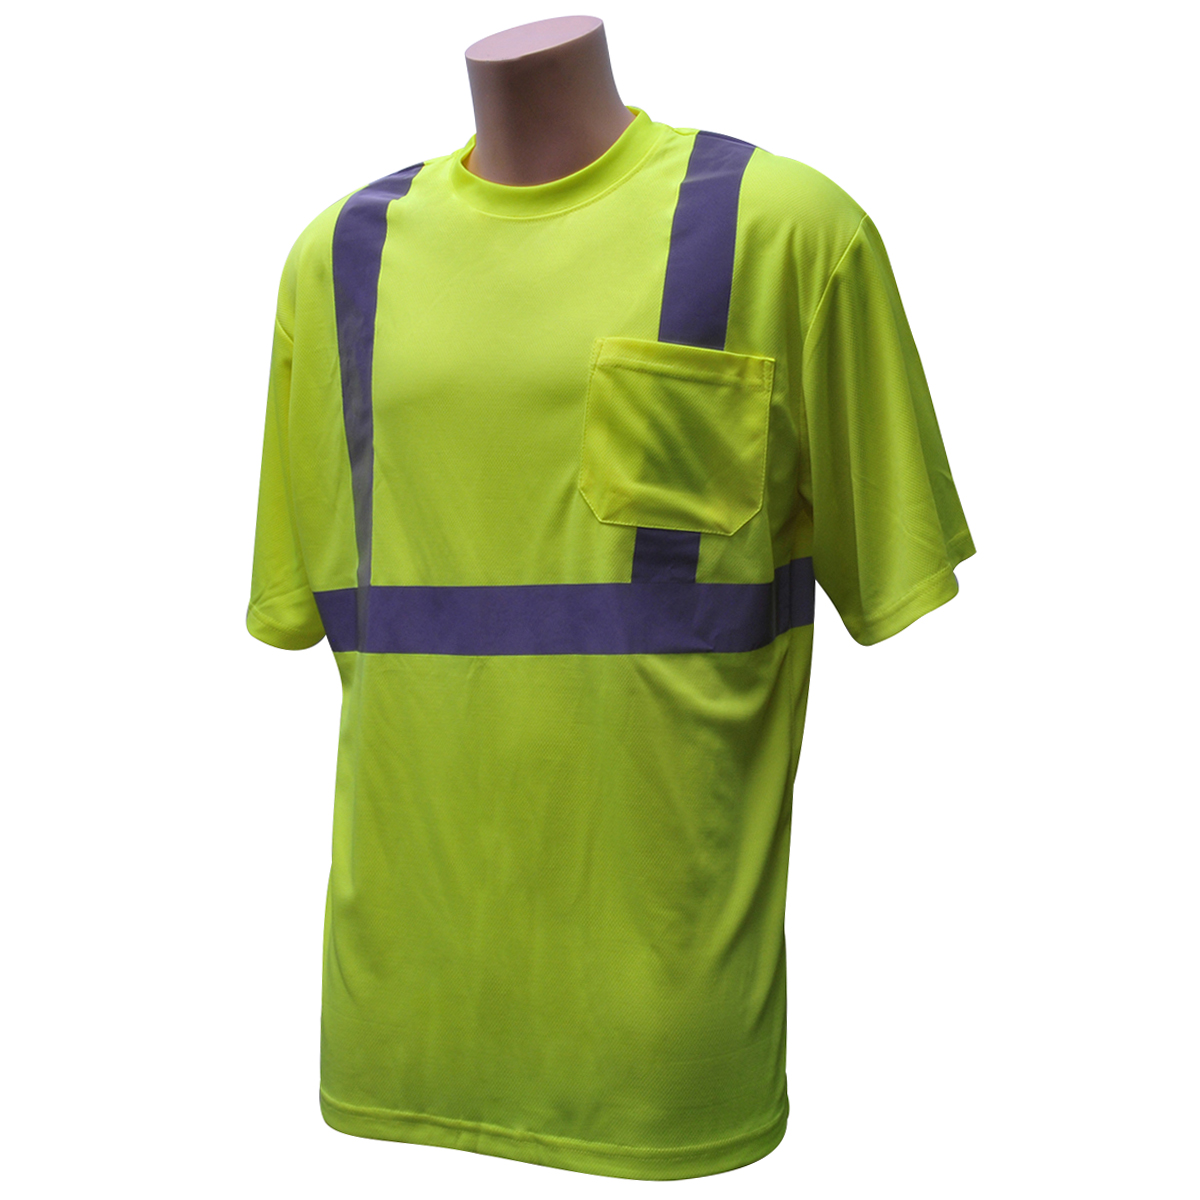 BlackCanyon Outfitters Short Sleeve Lime Pocket Reflective T-Shirt ANSI ISEA 107-2010 Class 2-Size 3XL